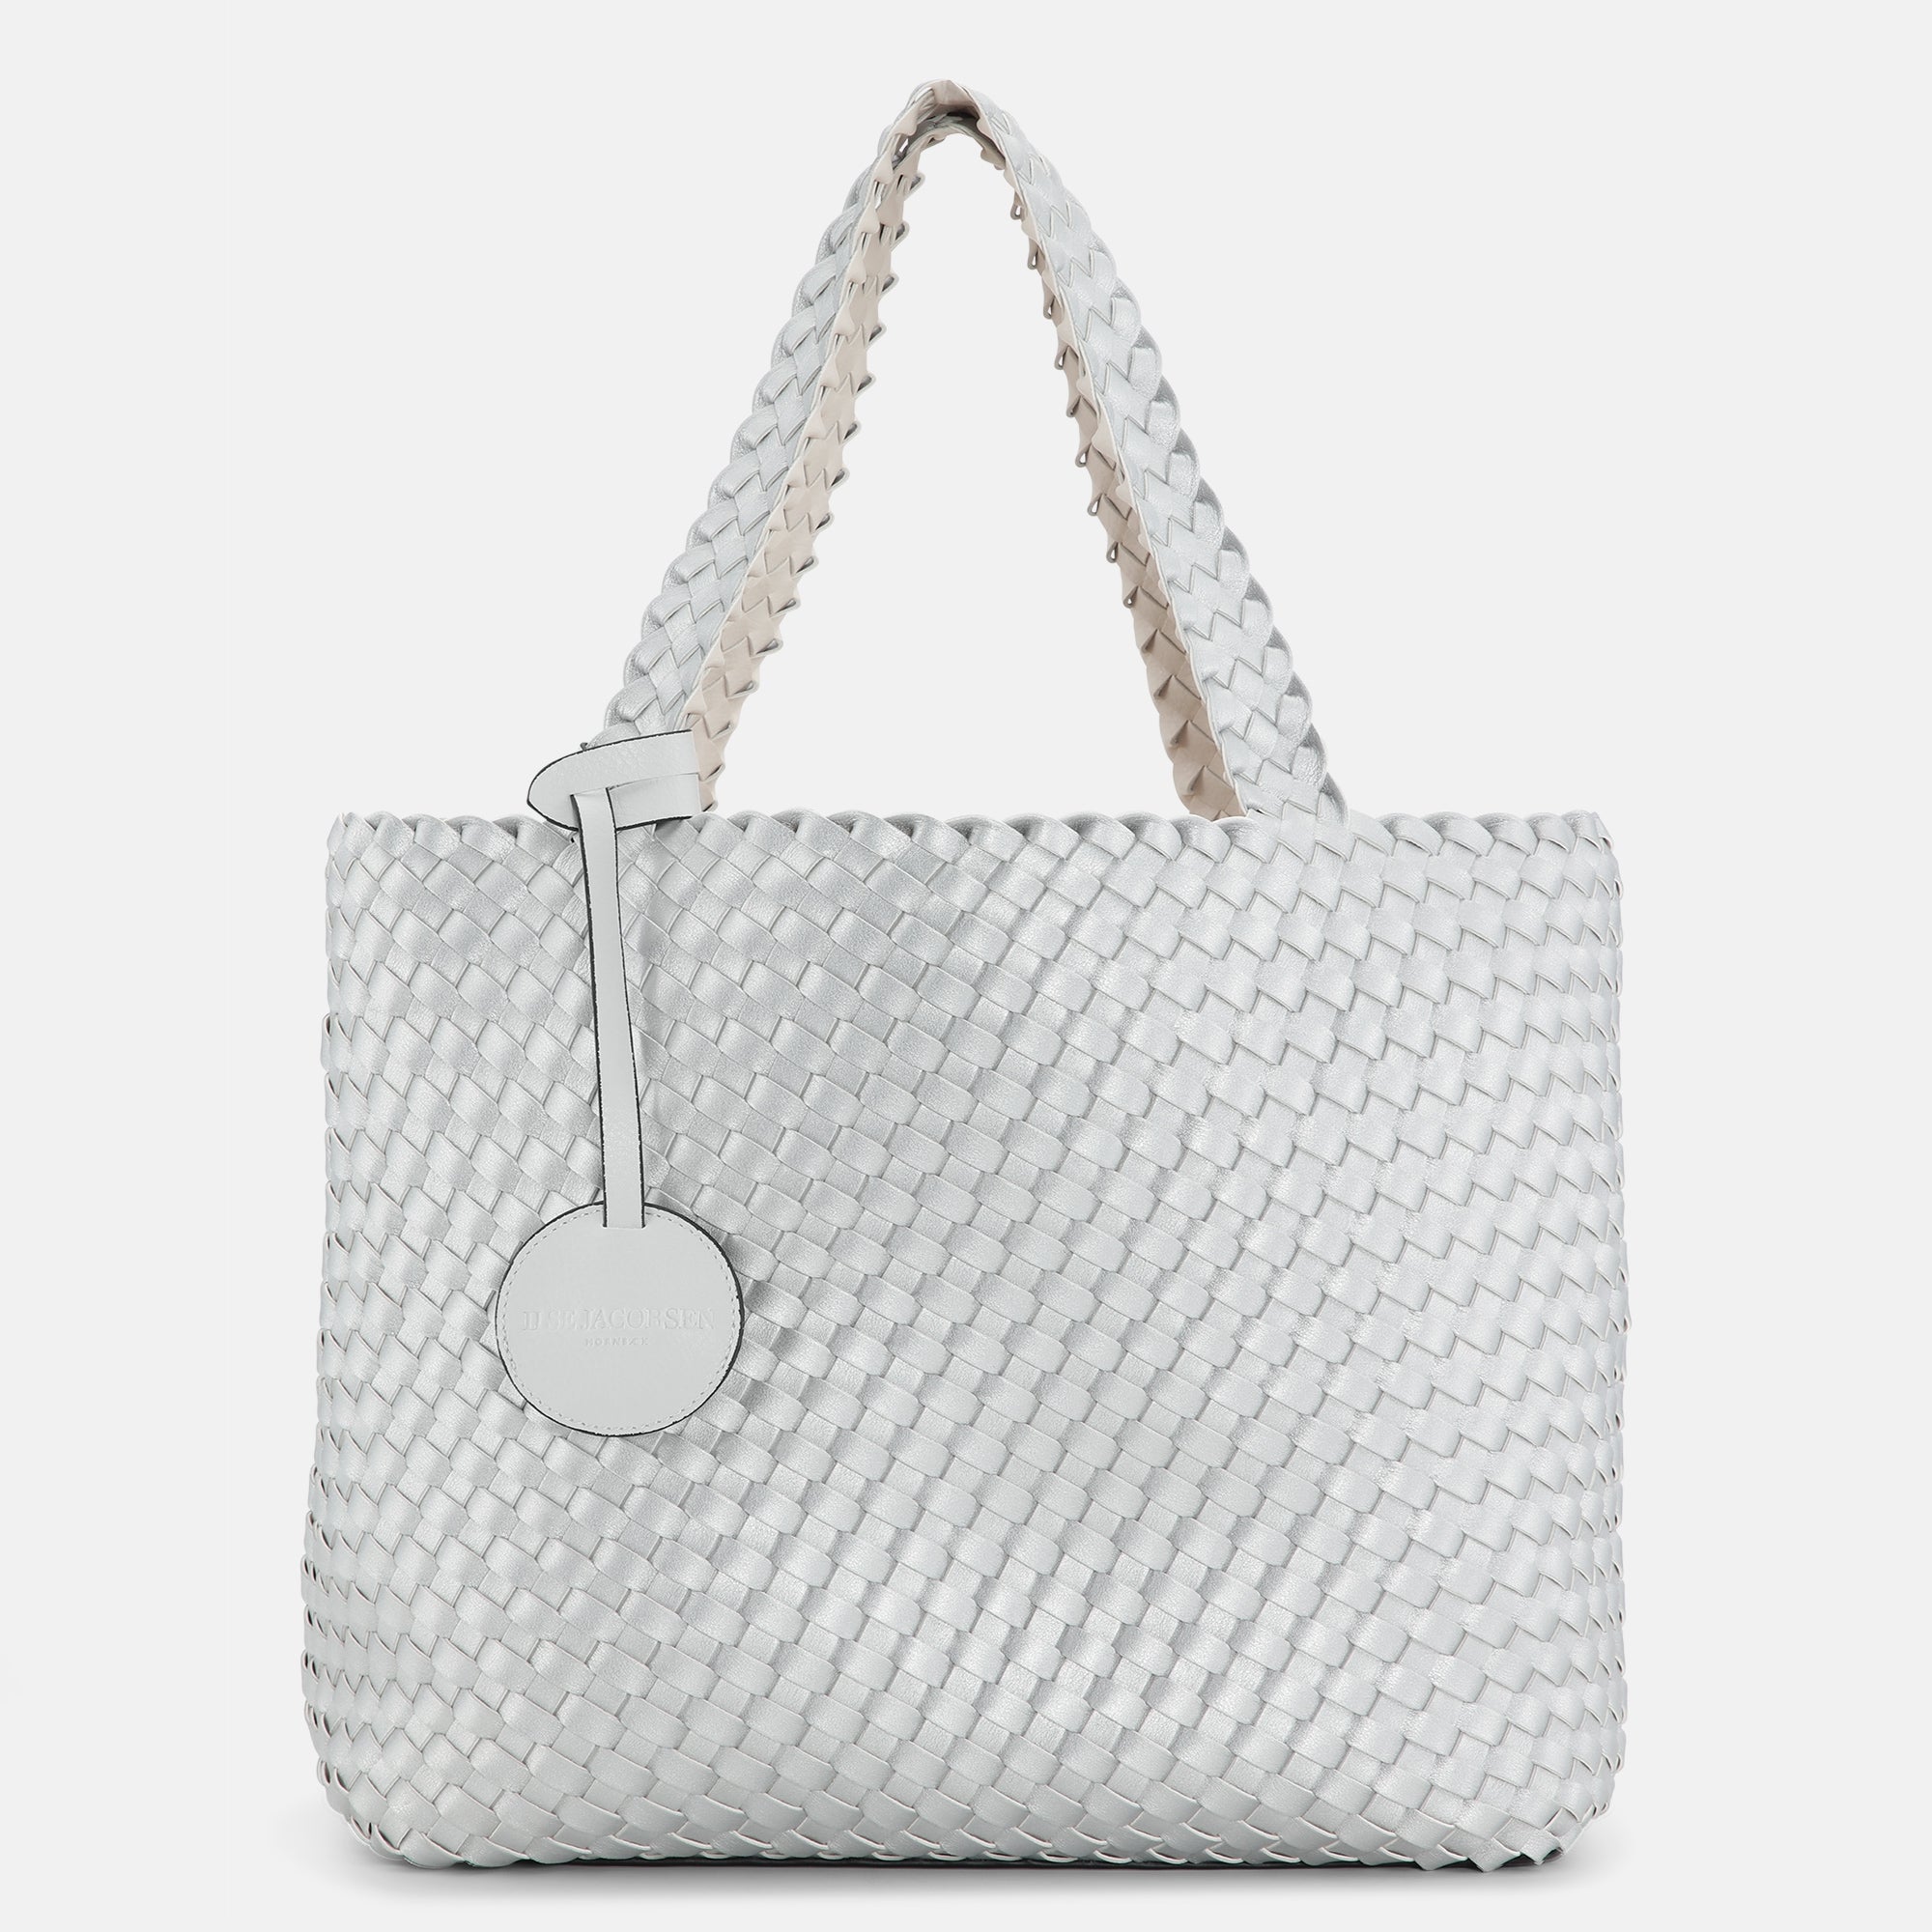 Tote Bag BAG08 - 104710 Egg White Silver | Egg White Silver